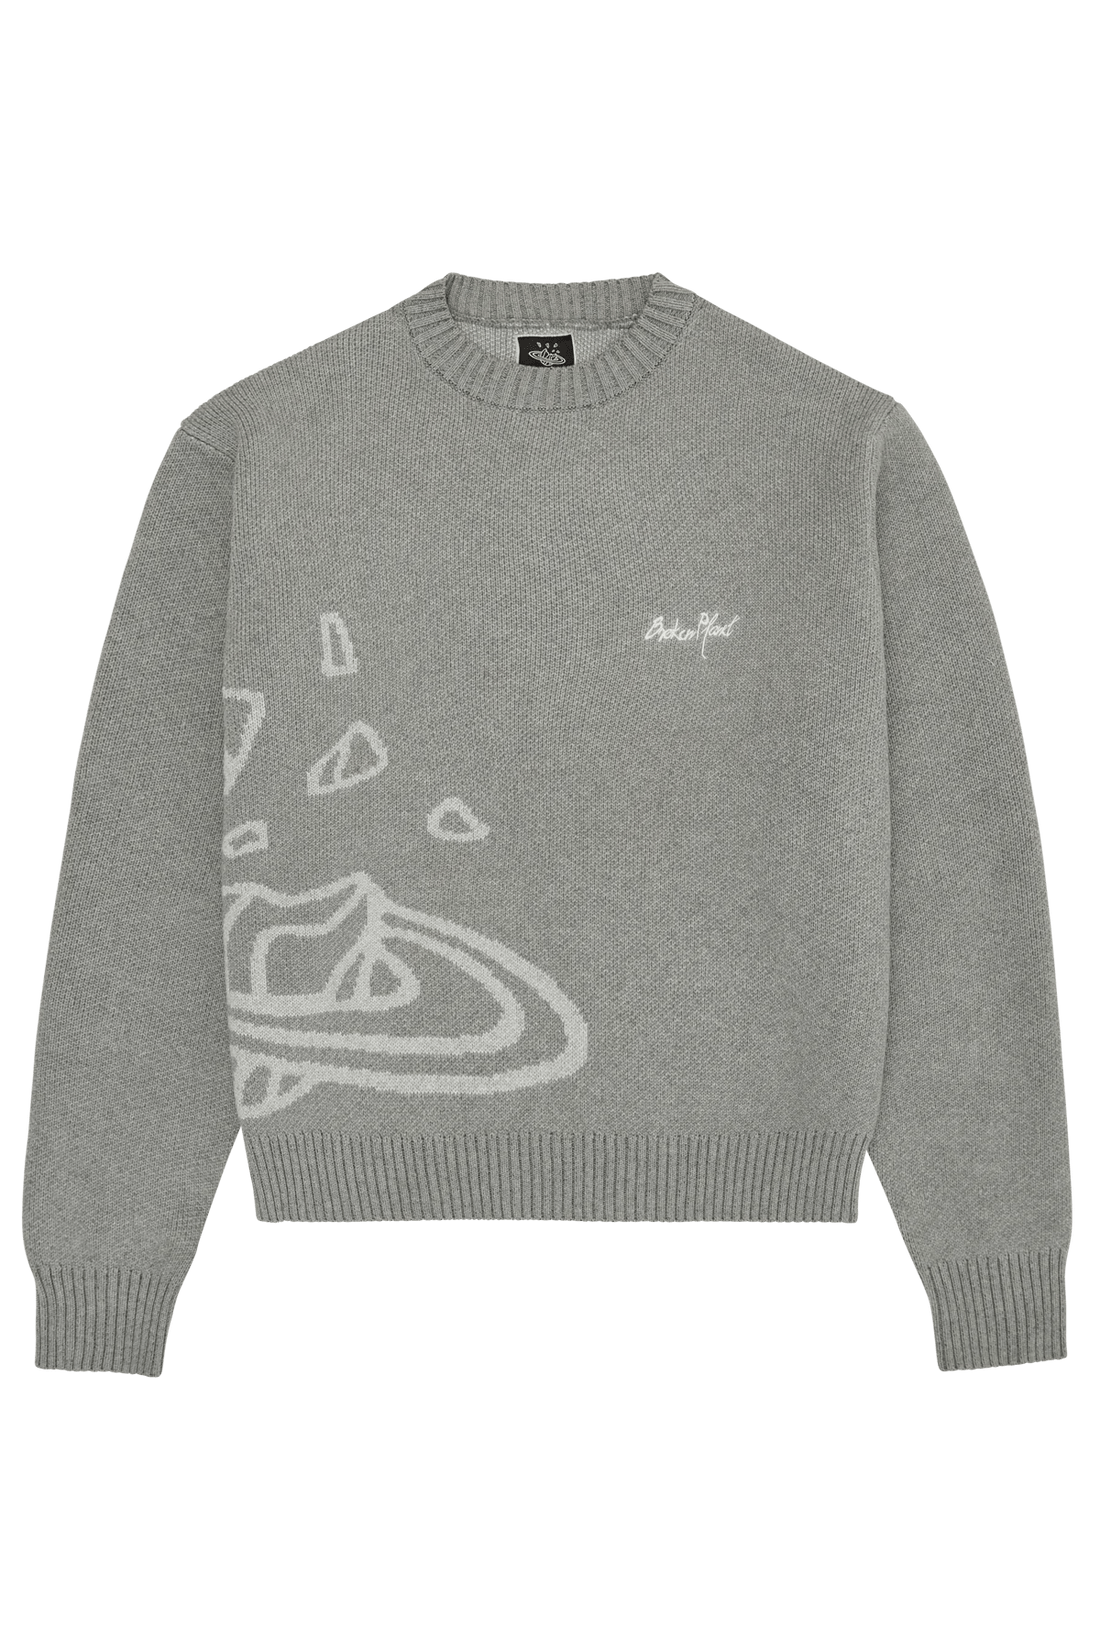 Broken Planet Market Knit Sweater - Heather Gray - INSTAKICKSZ LTD